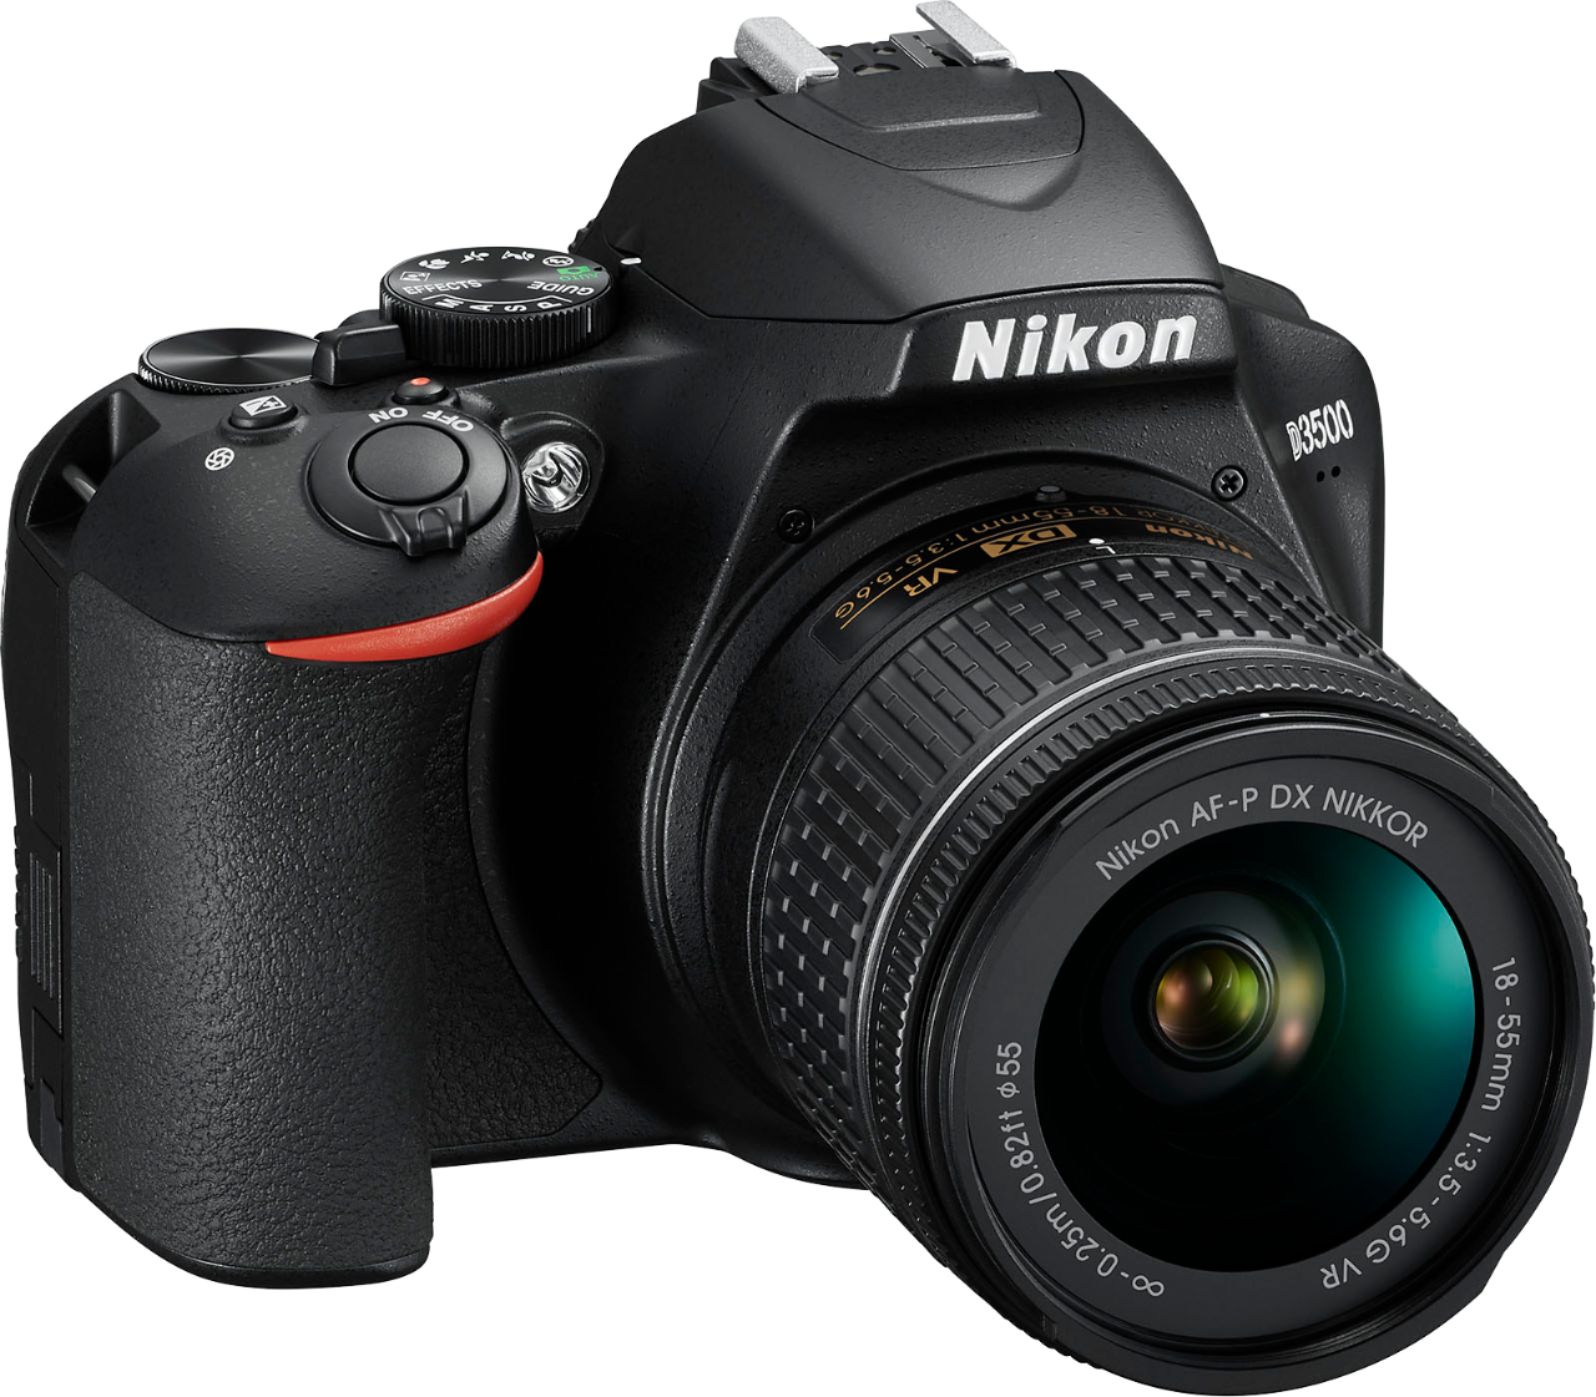 Angle View: Nikon - D3500 DSLR Video Two Lens Kit with AF-P DX NIKKOR 18-55mm f/3.5-5.6G VR & AF-P DX NIKKOR 70-300mm f/4.5-6.3G ED - Black